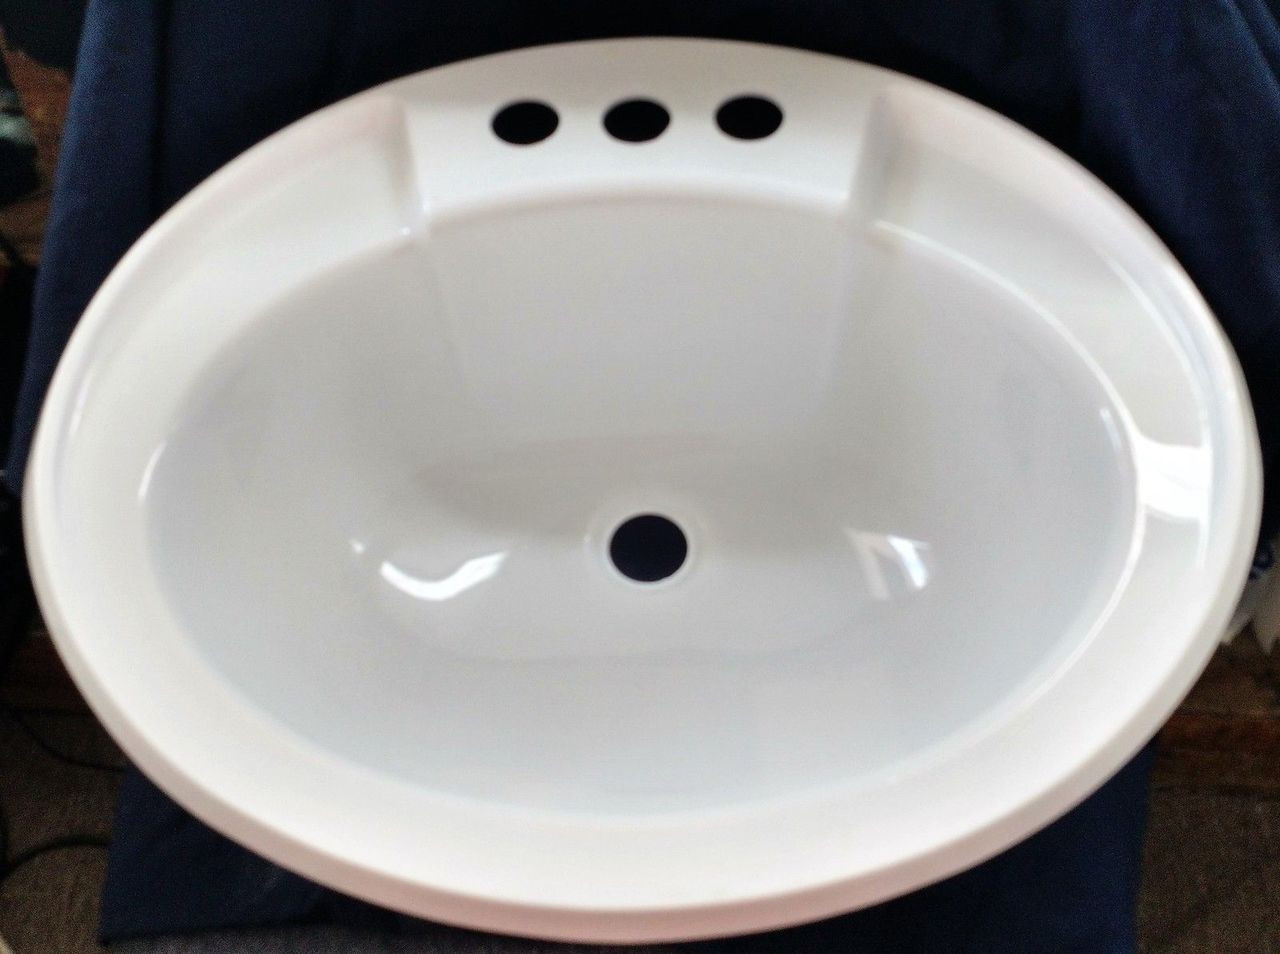 20 x 17 oval steel porcelain bathroom sink